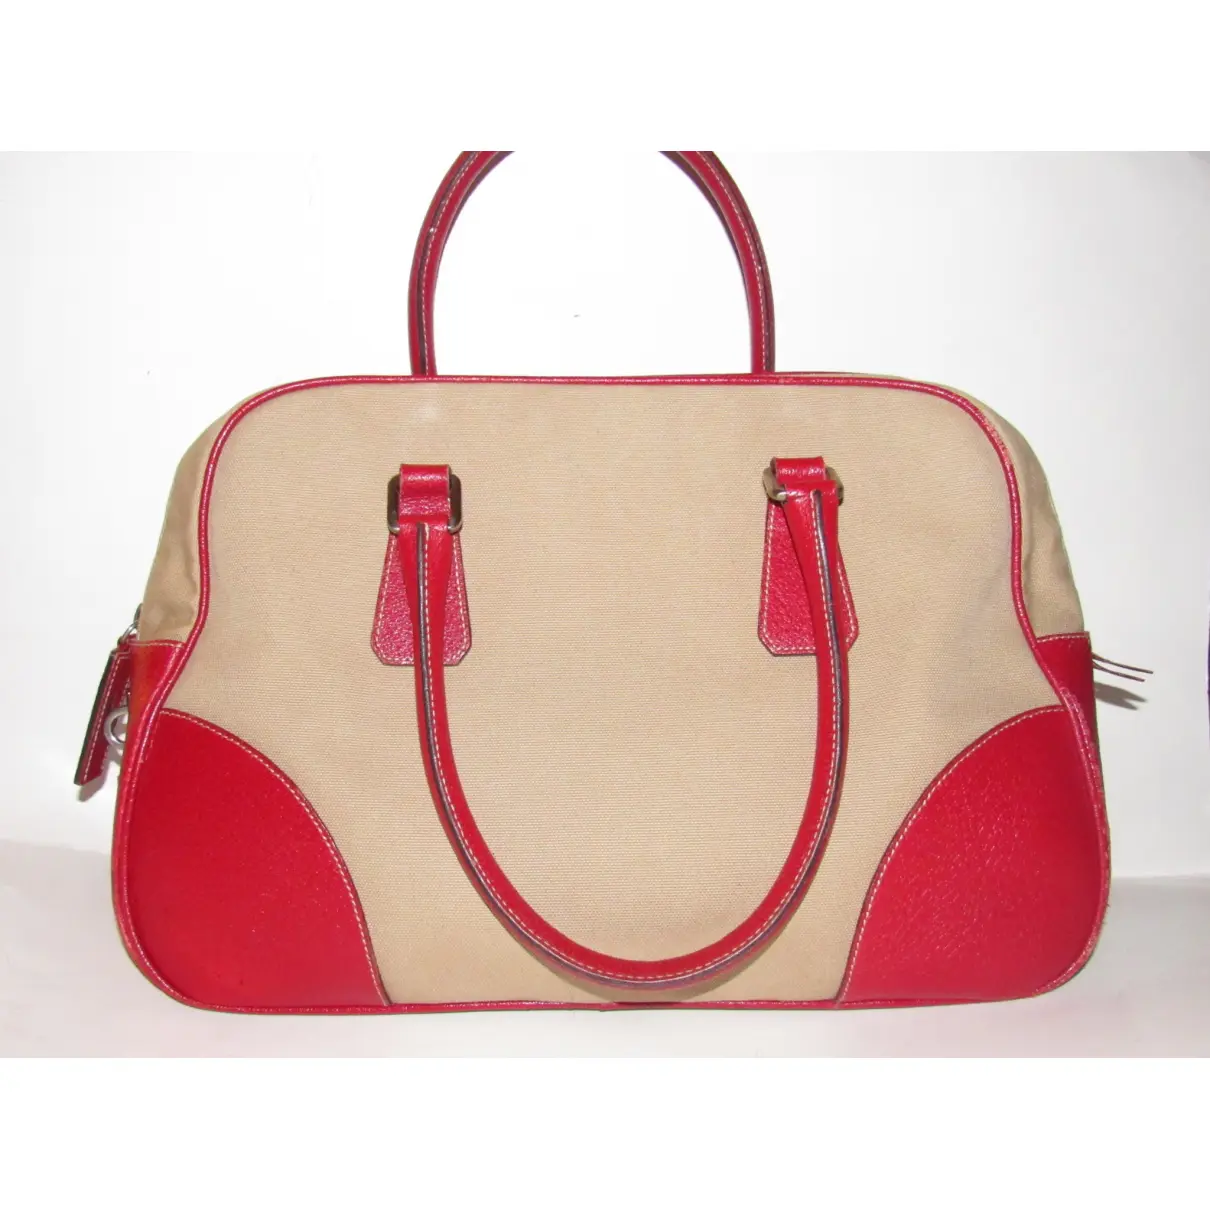 Buy Prada Bowling cloth handbag online - Vintage